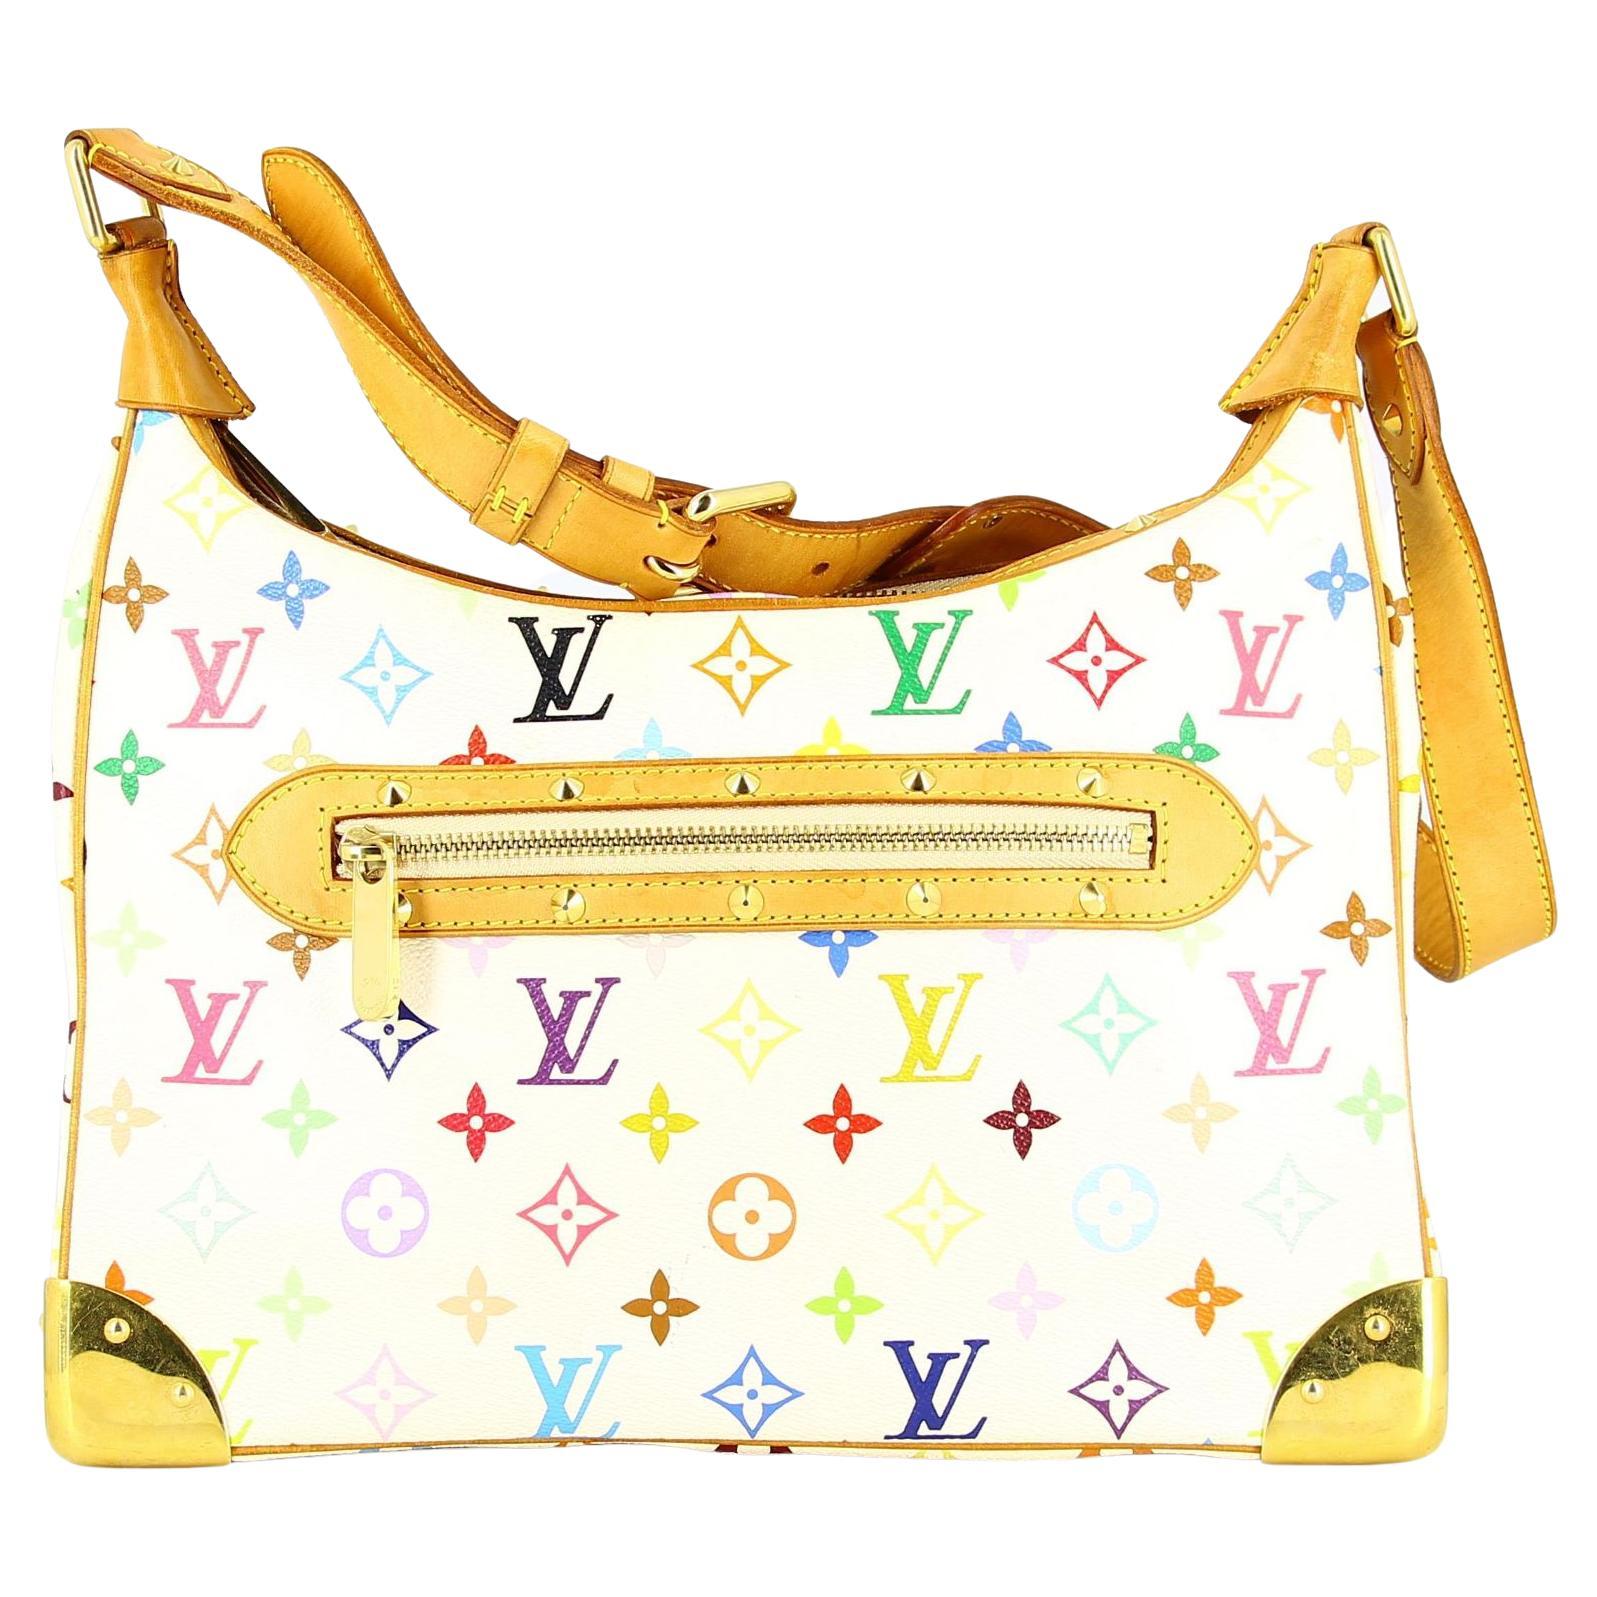 2010 Louis Vuitton Boulogne Handbag in Multicolor Monogram For